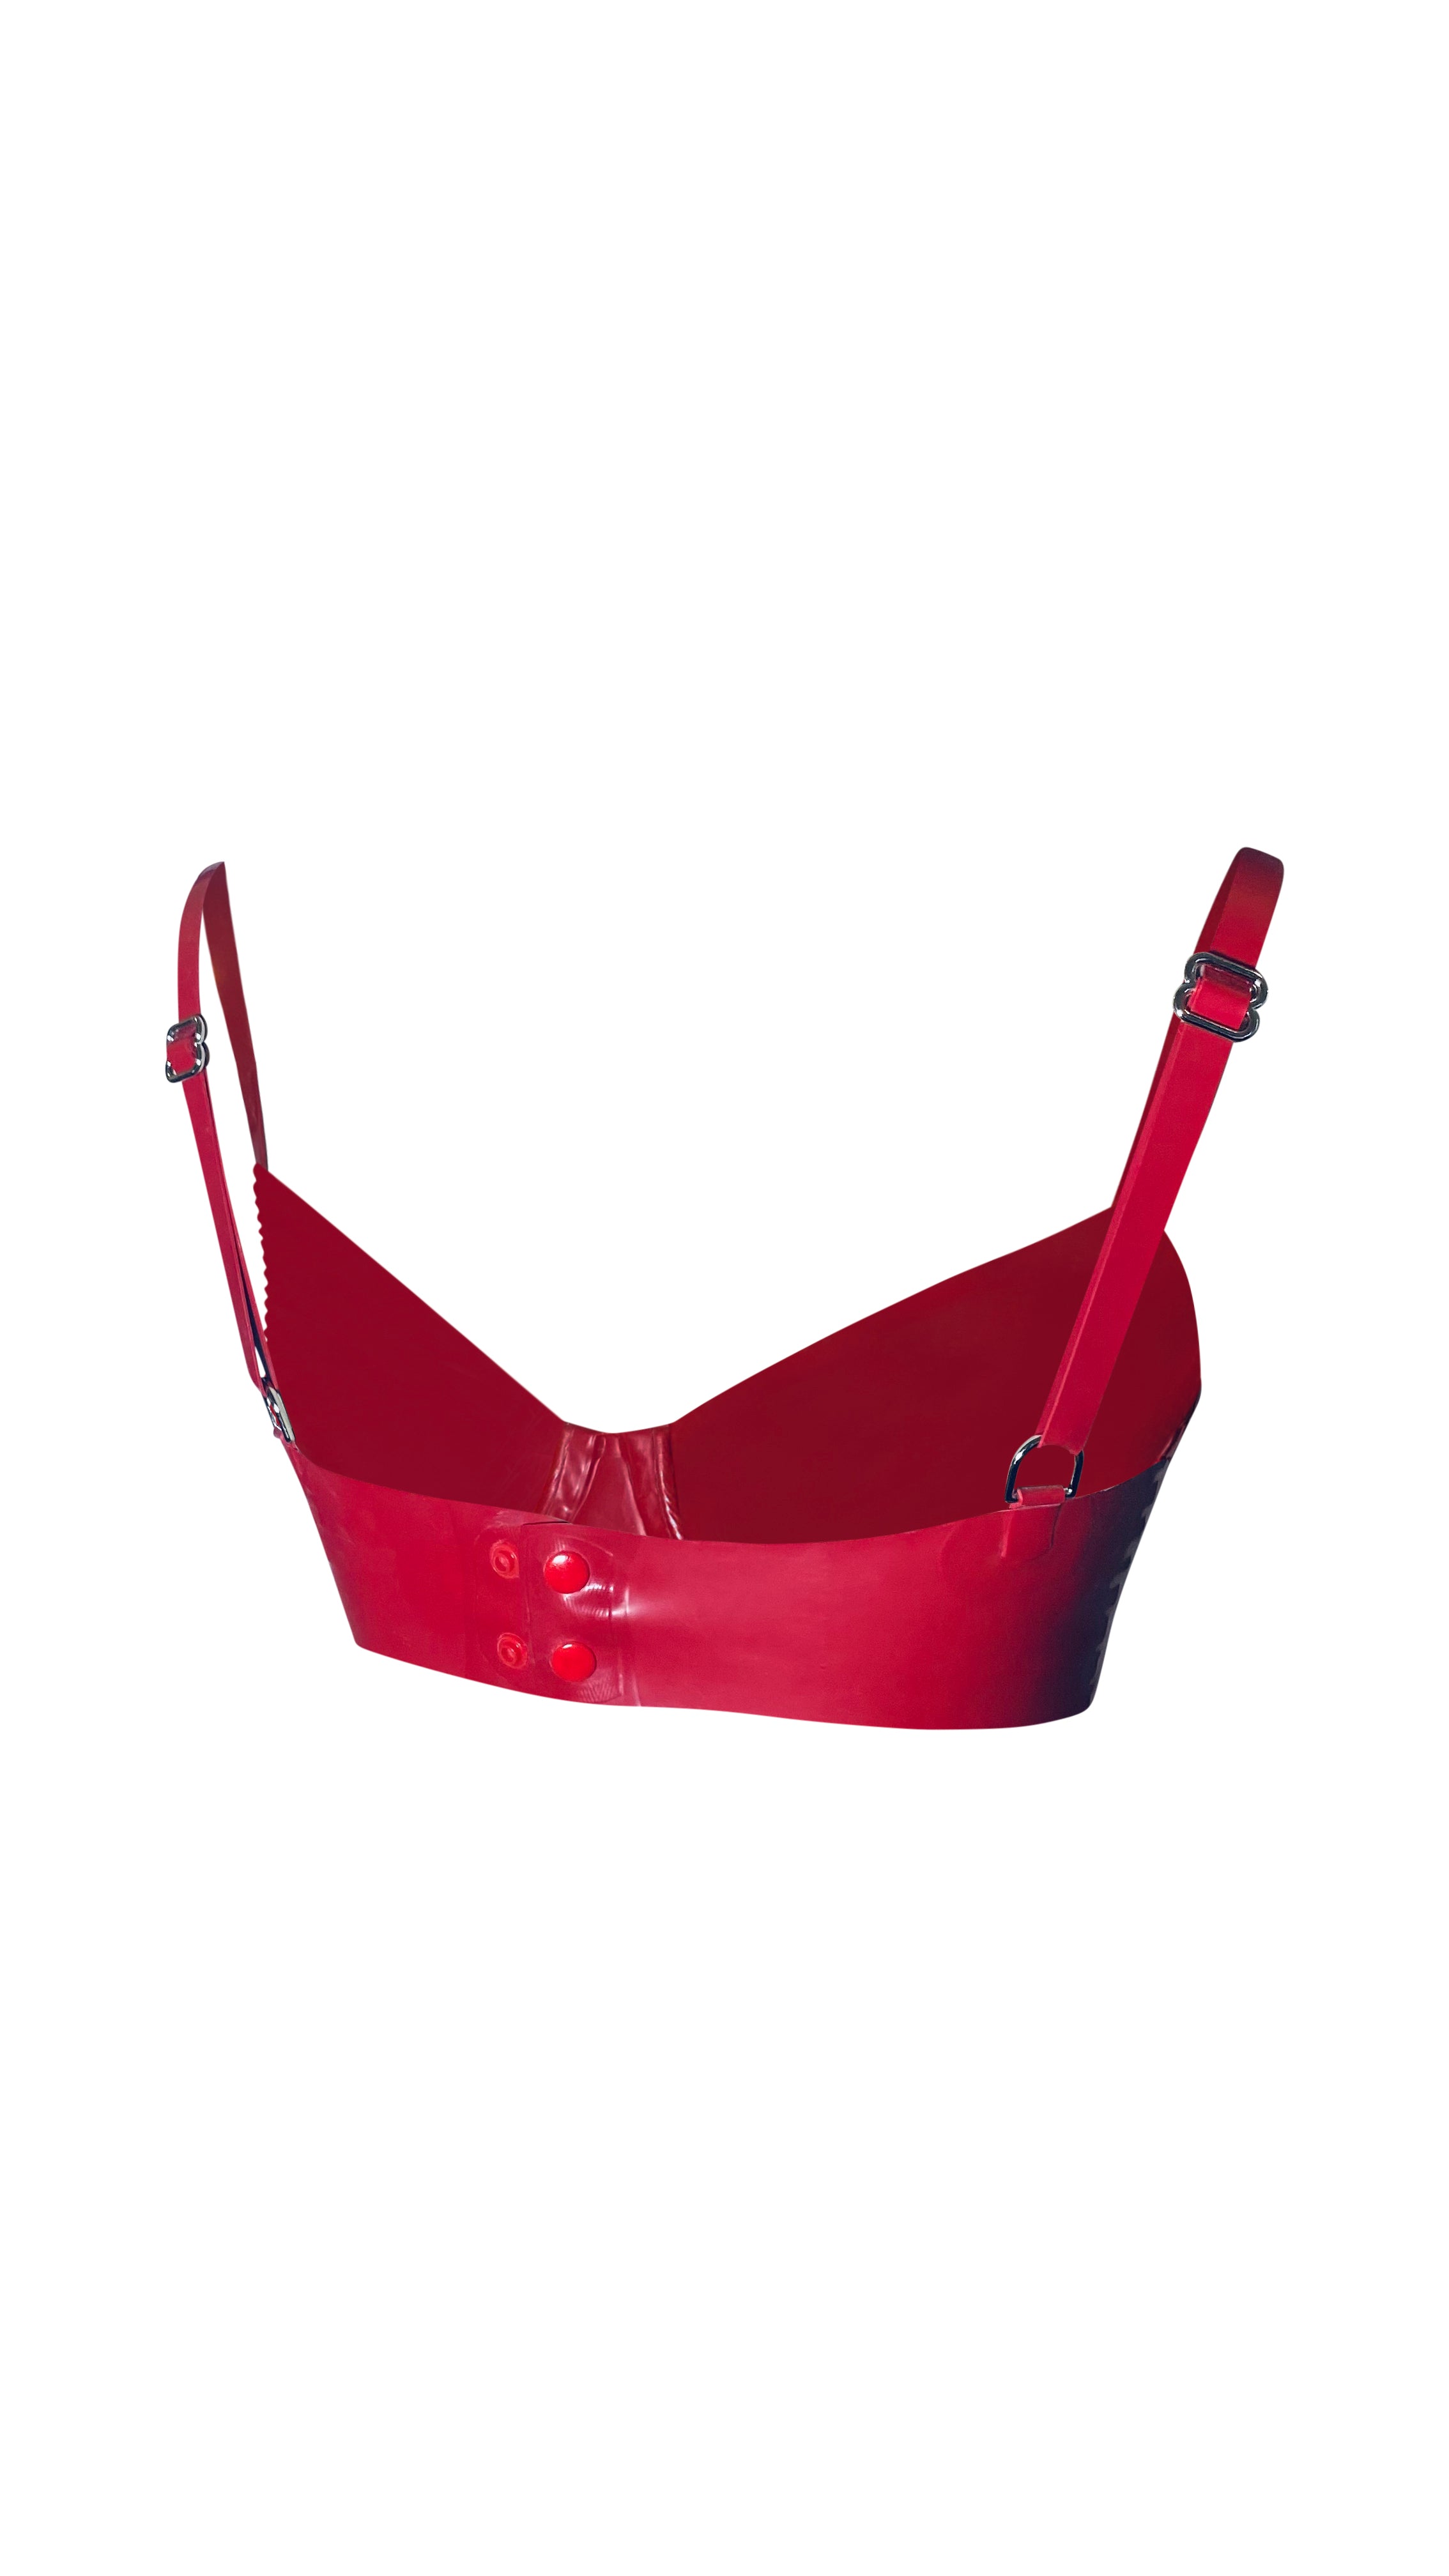 Underwired red latex bra